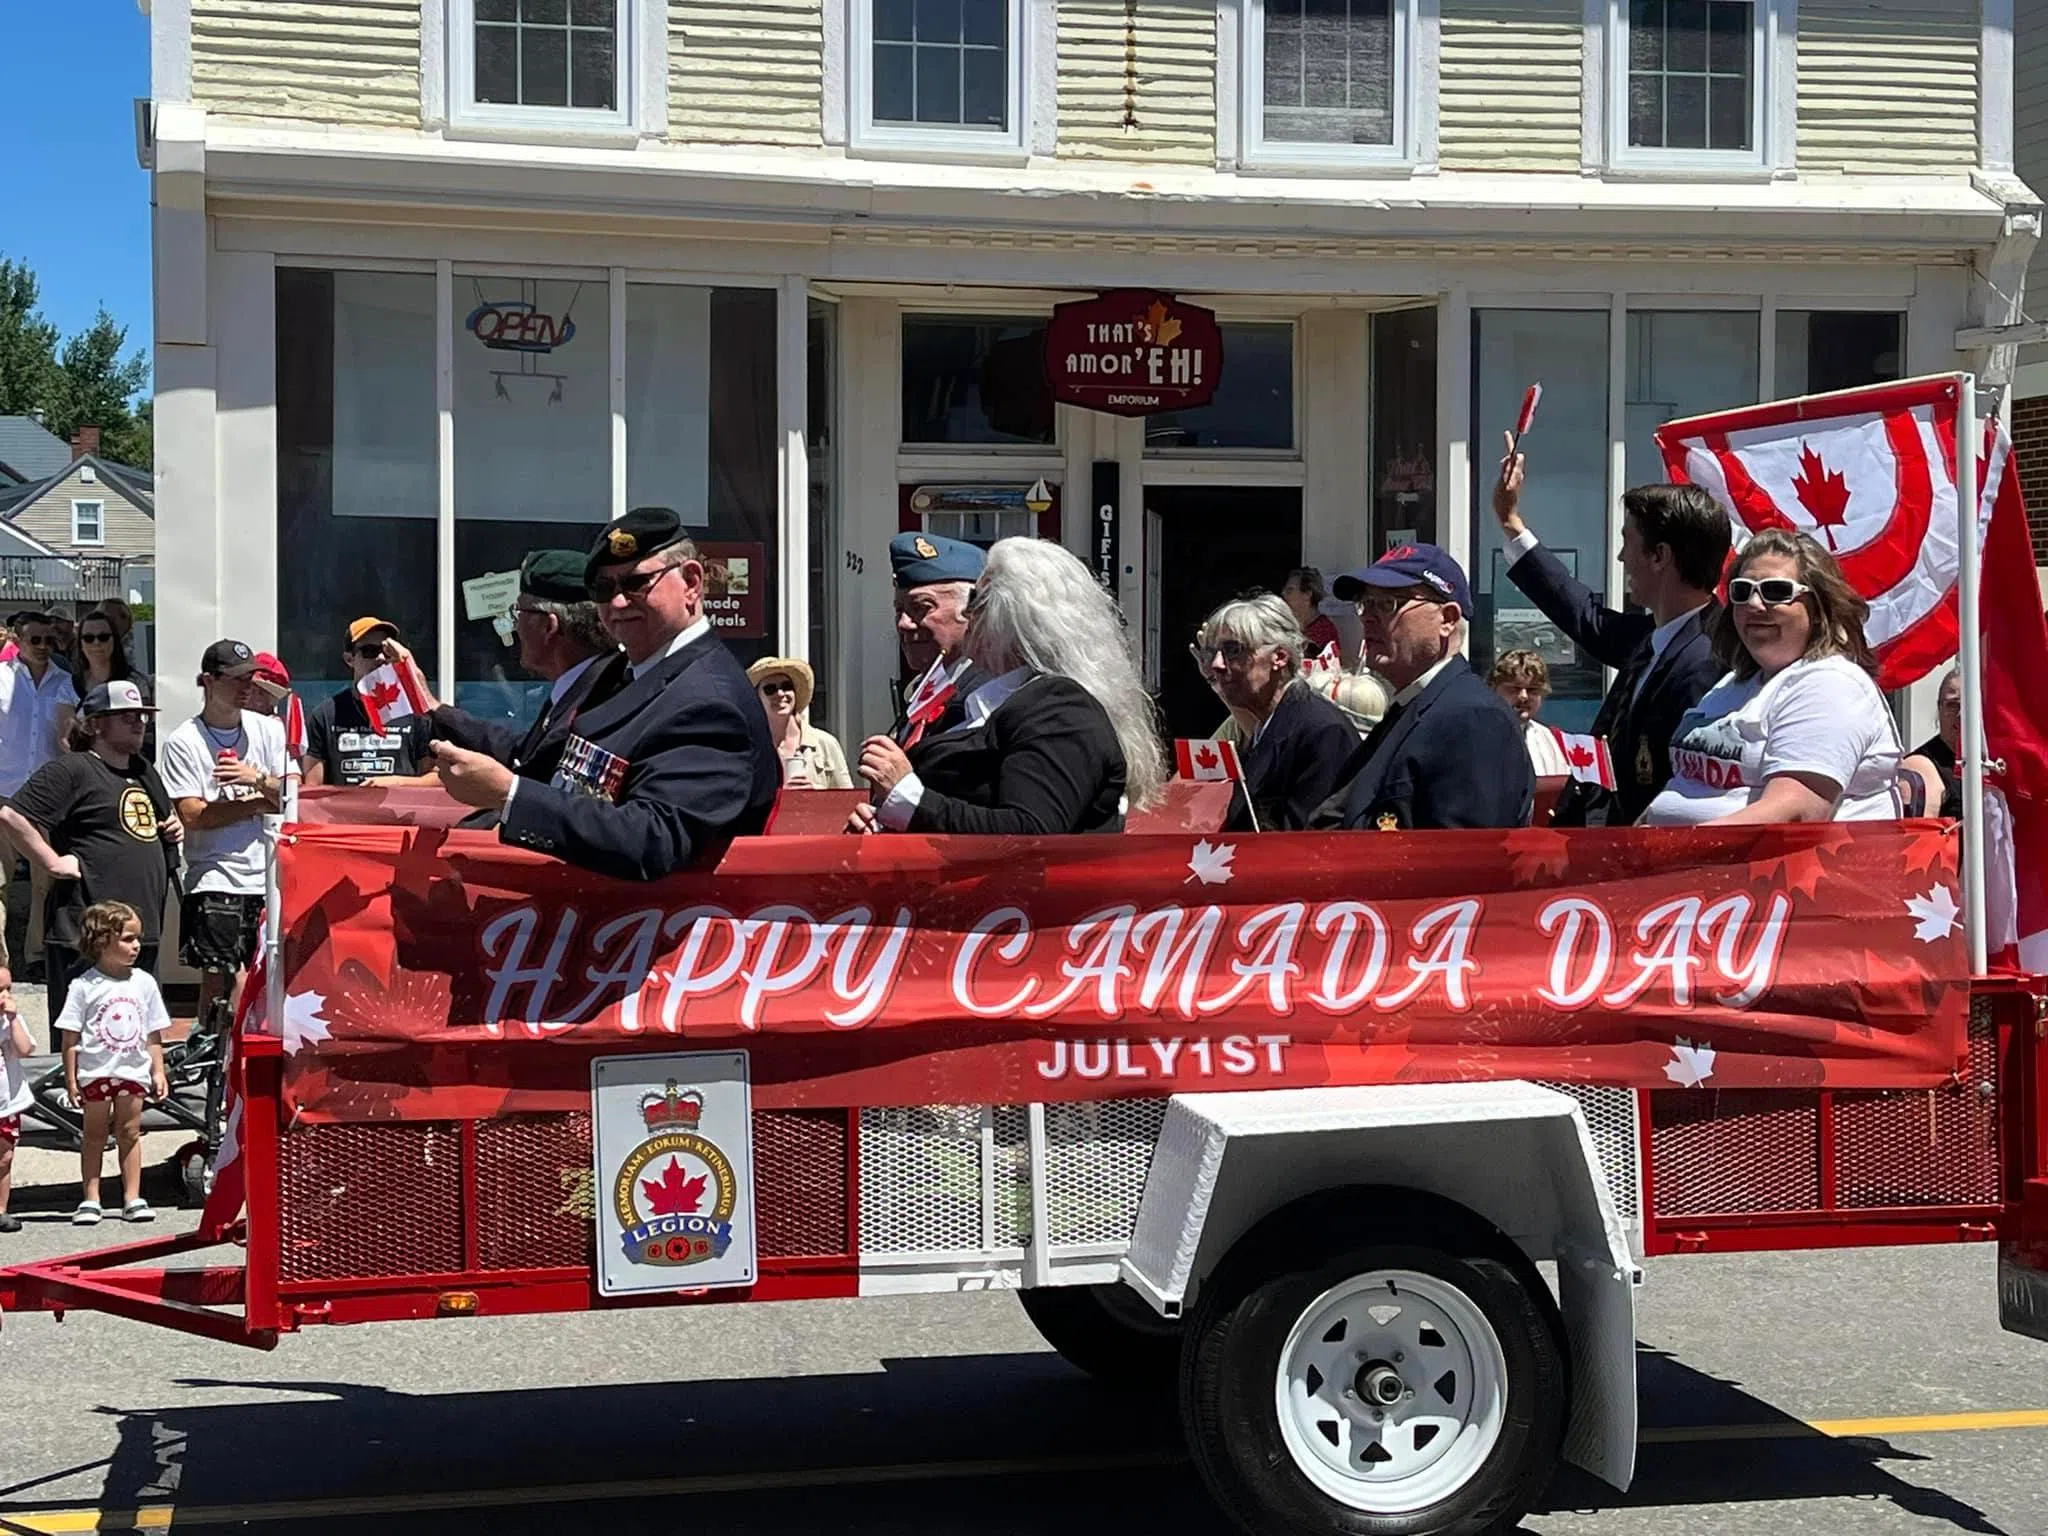 PHOTOS: Canada Day parade in Saint Andrews